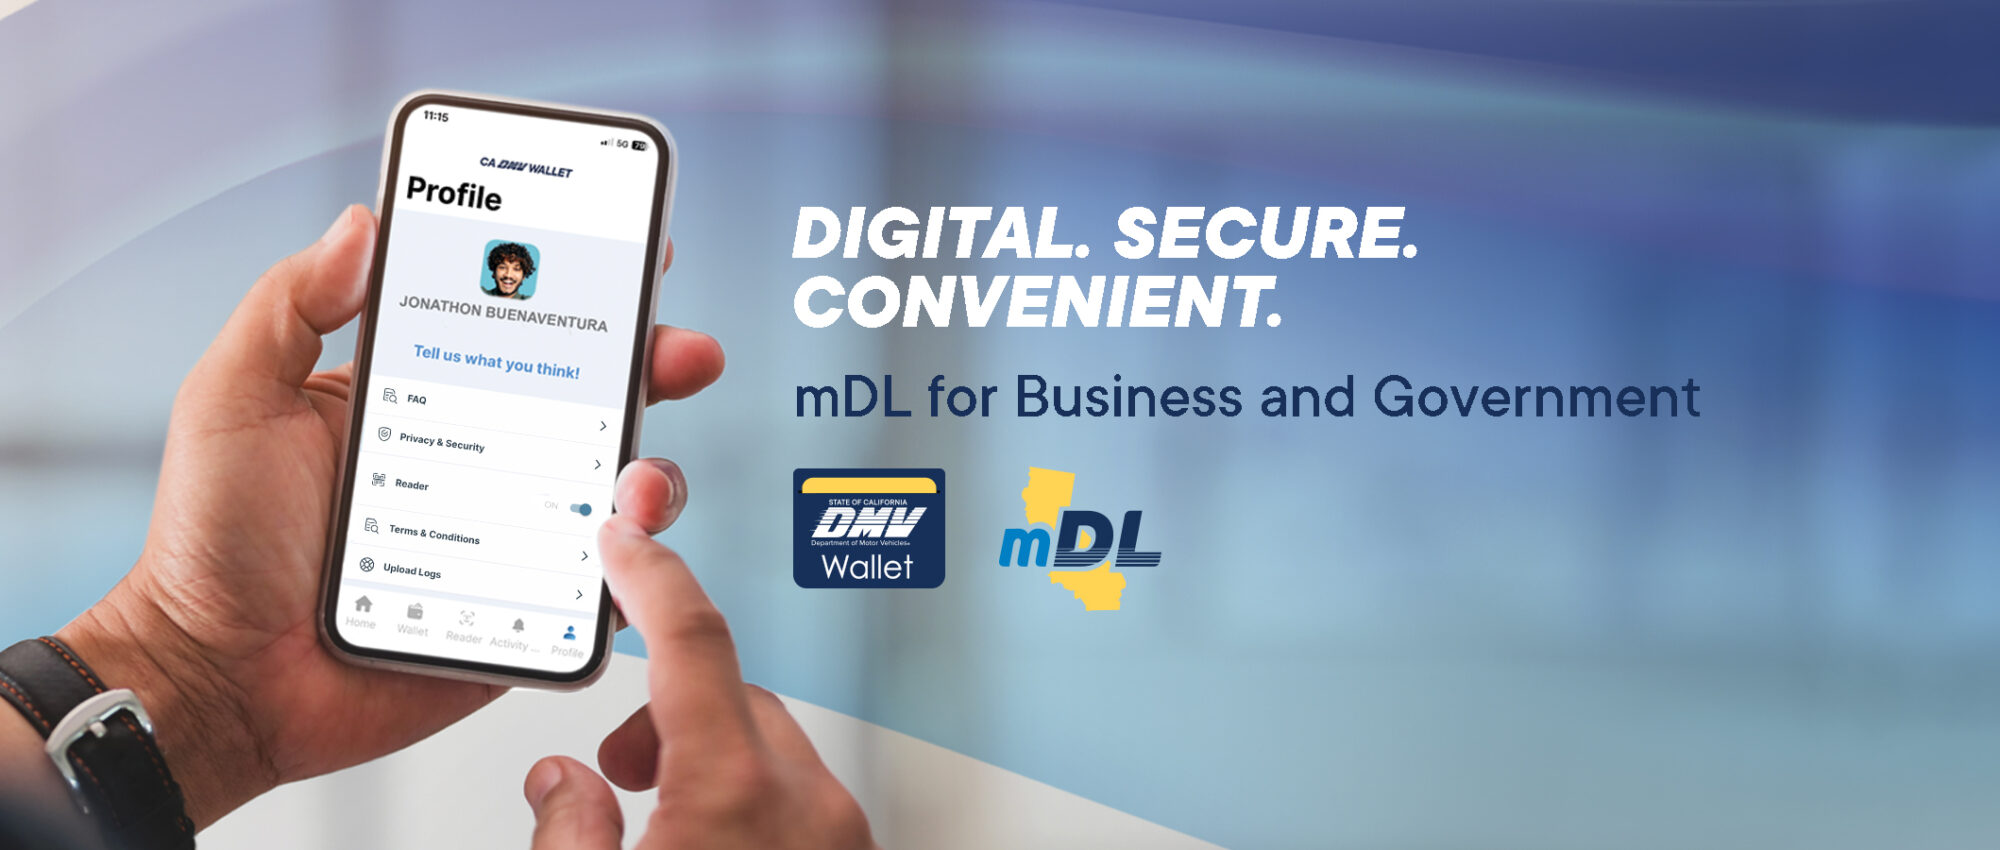 Digital. Secure. Convenient mDL Banner